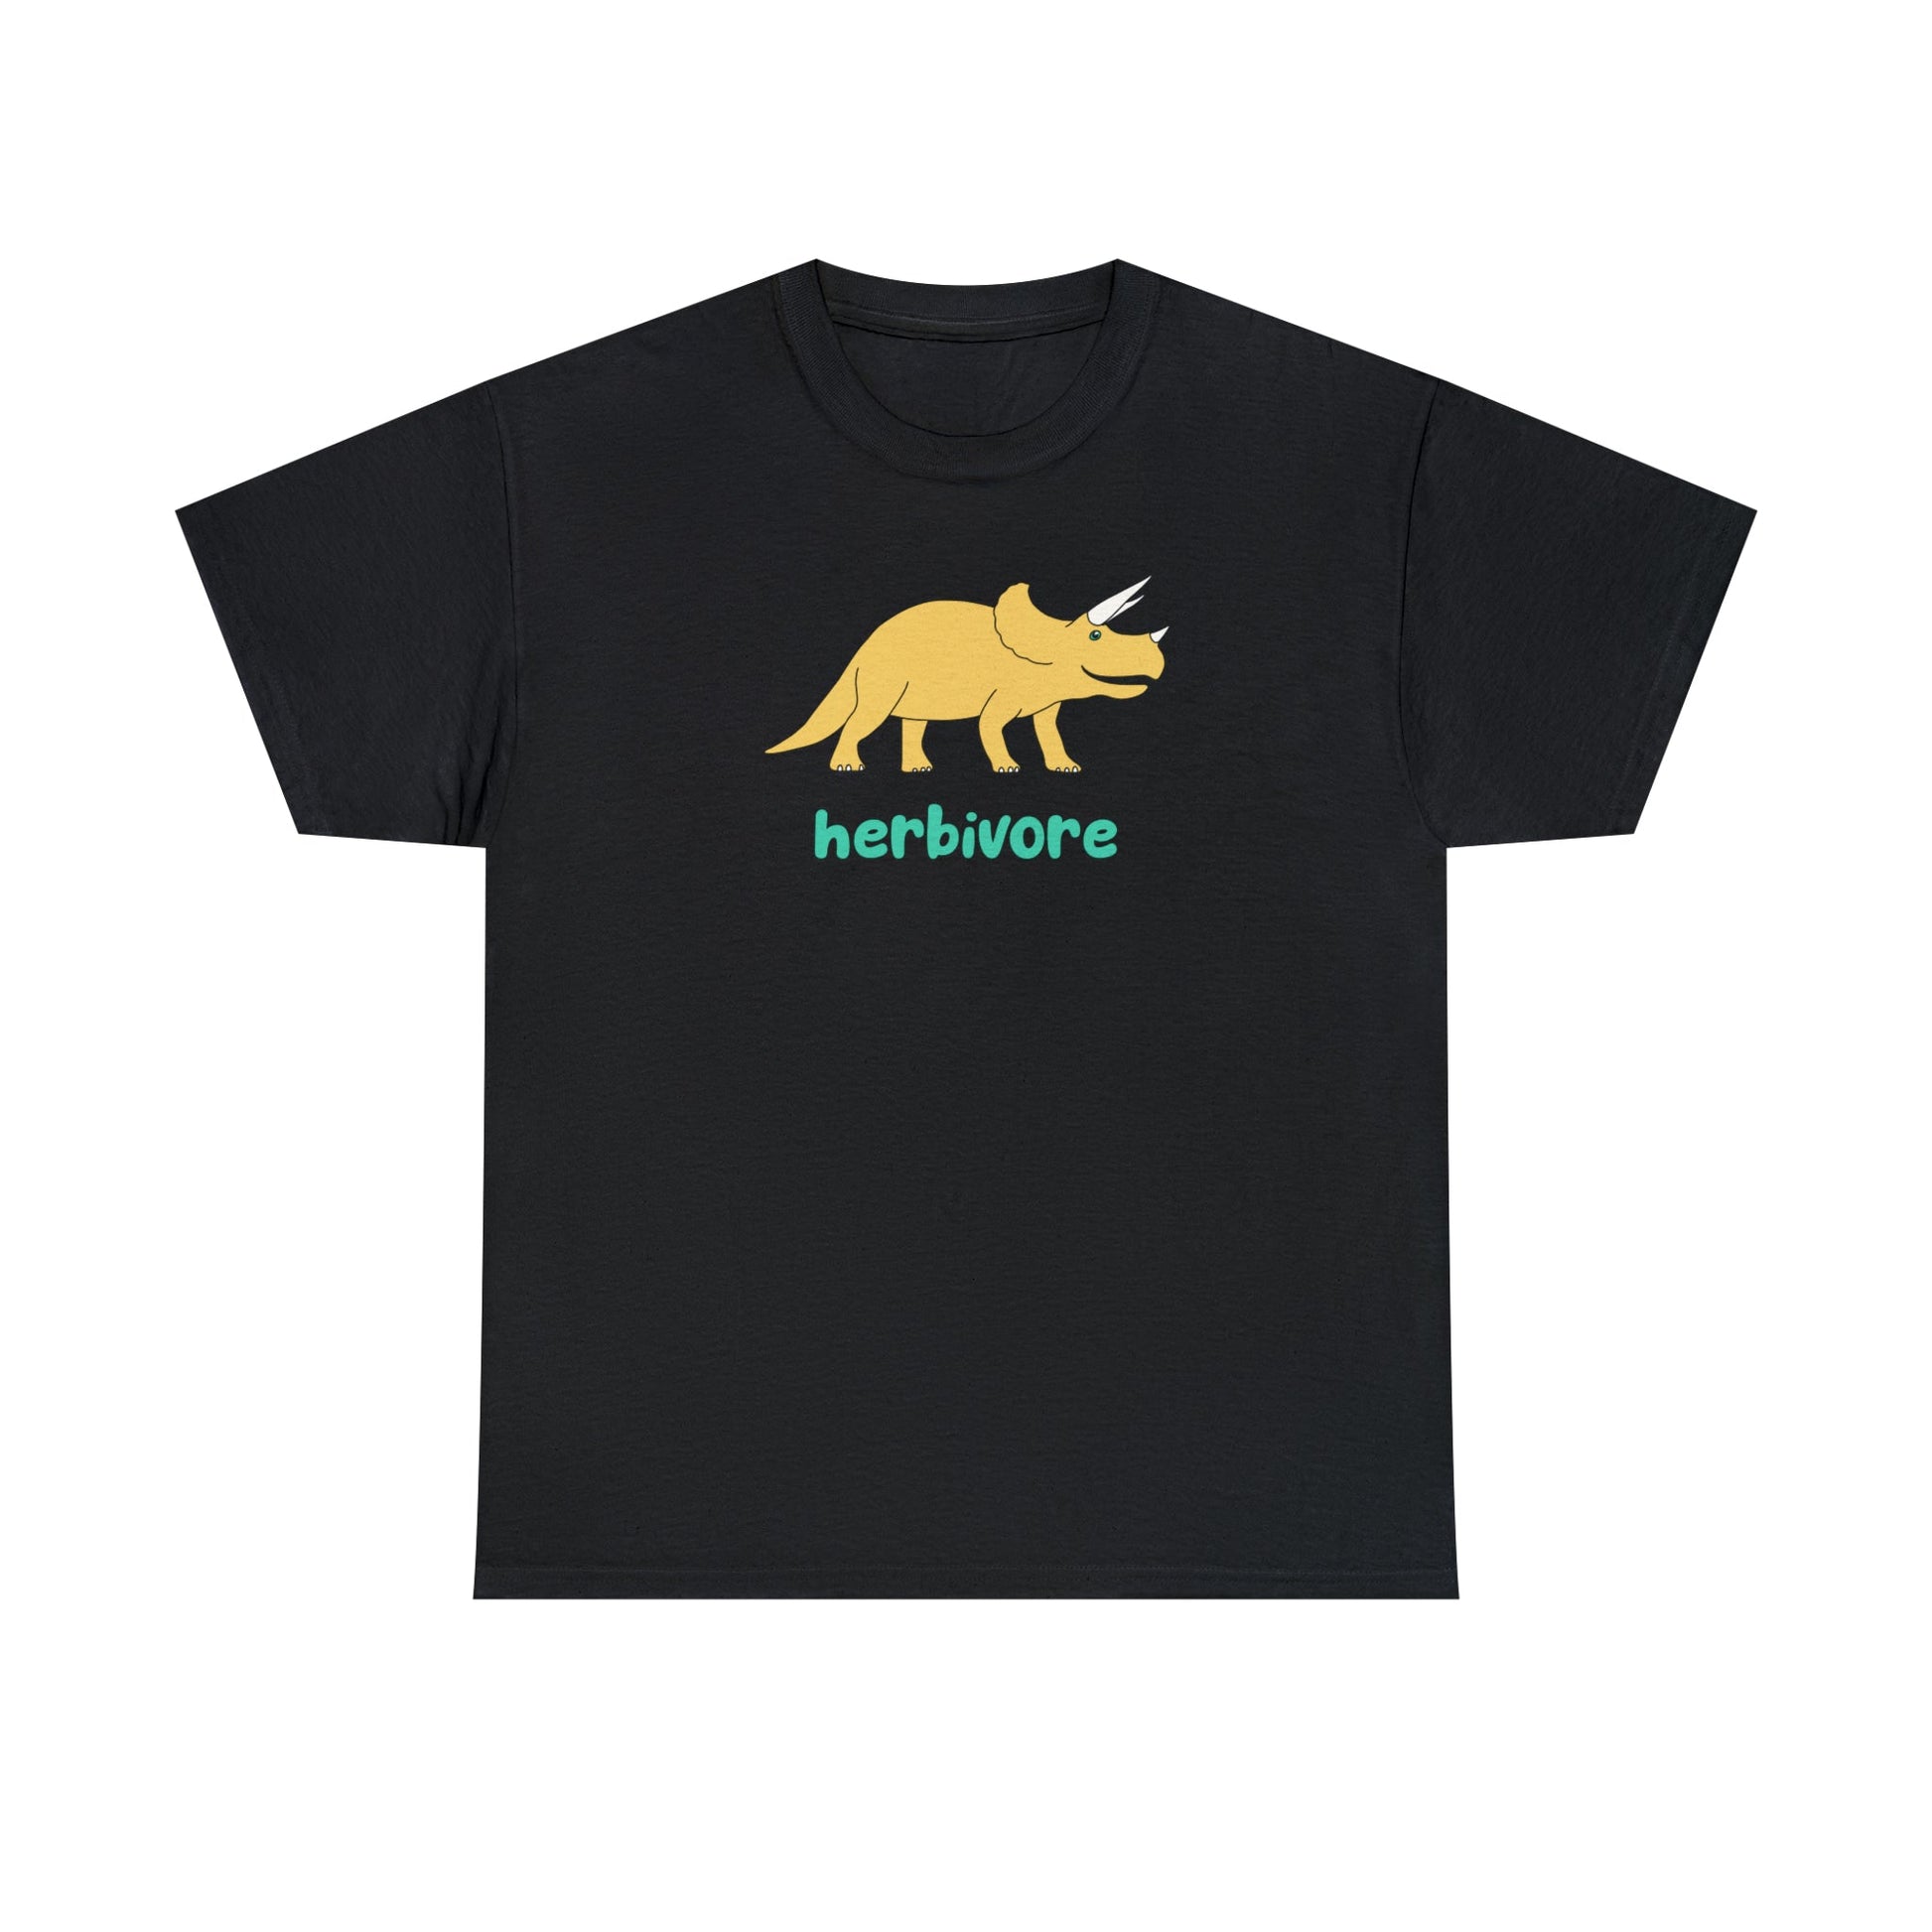 Herbivore | T-shirt - Detezi Designs-10259636947405947330